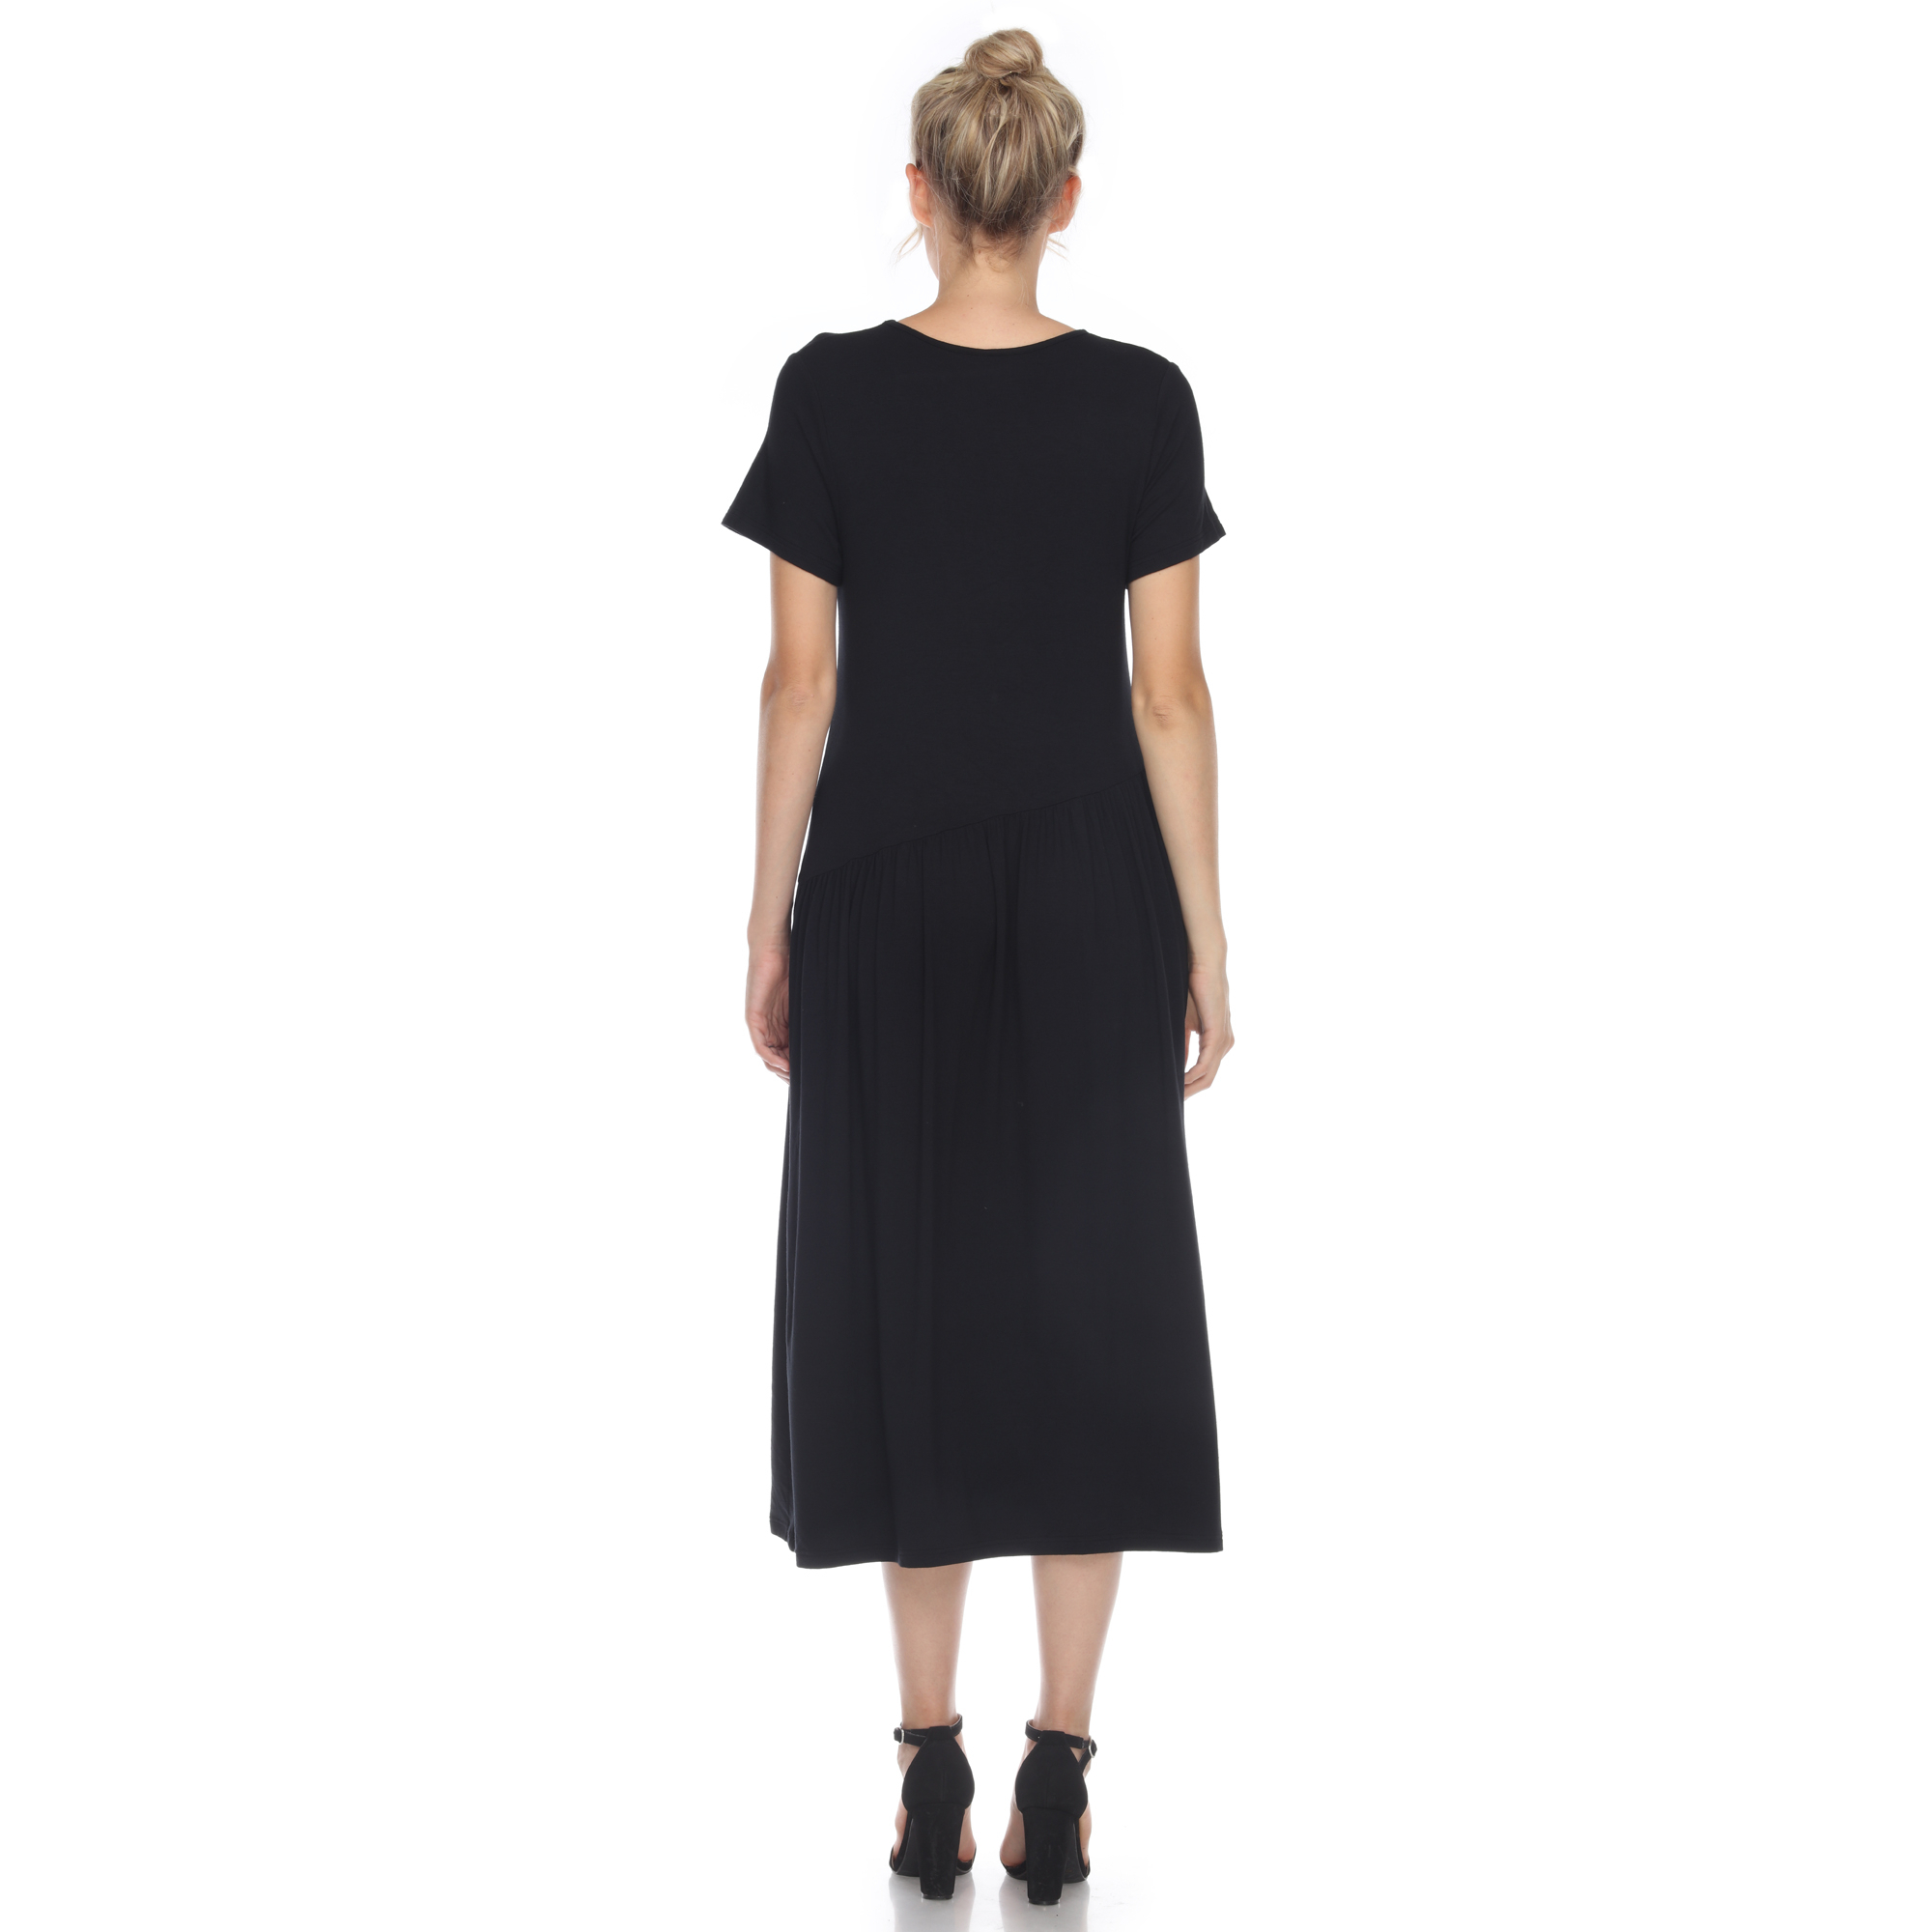 White Mark Womenâs Maternity Short Sleeve Maxi Dress - Olive, 1X